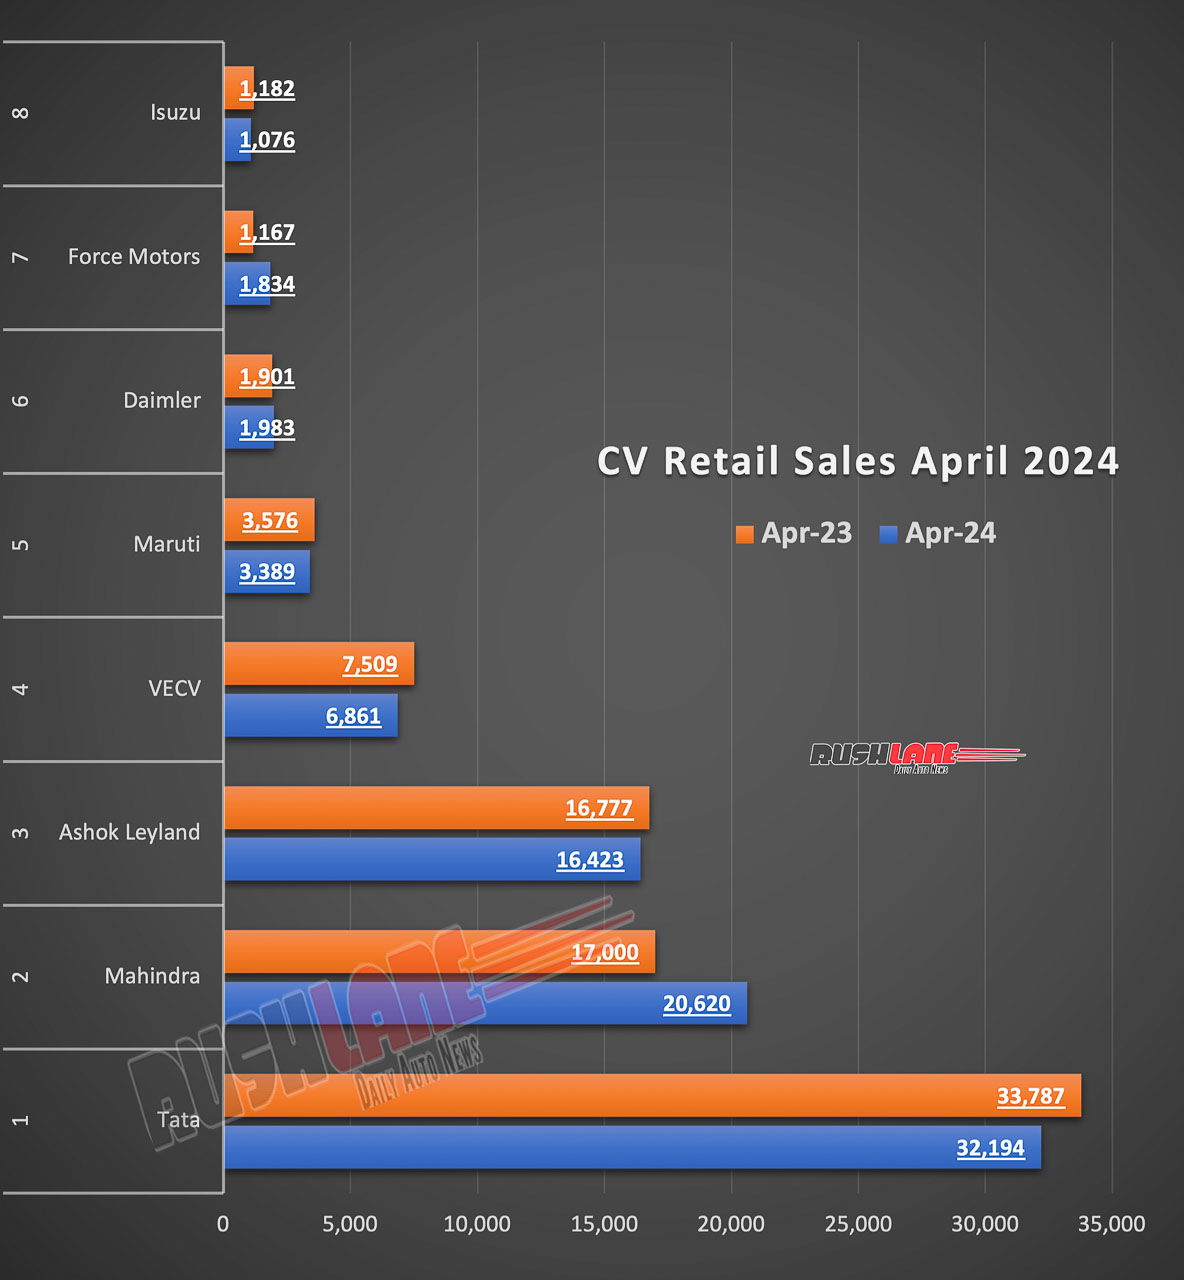 CV Retail Sales April 2024